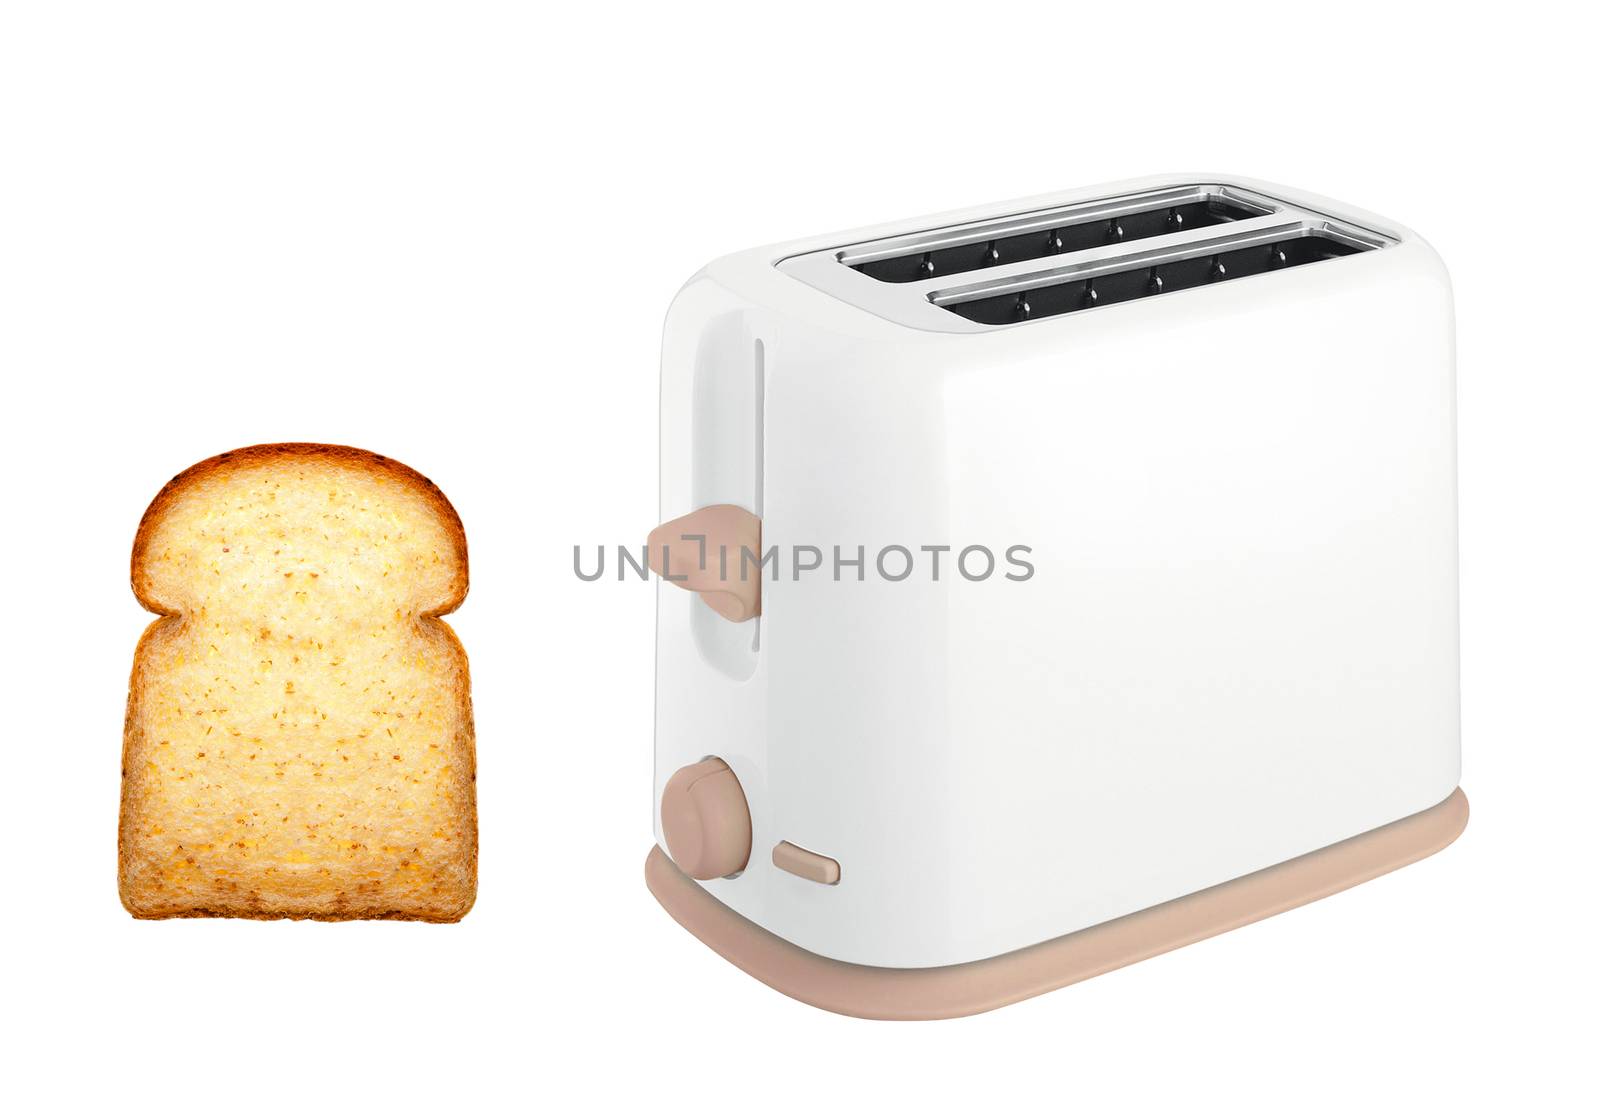 Bread toaster appliance